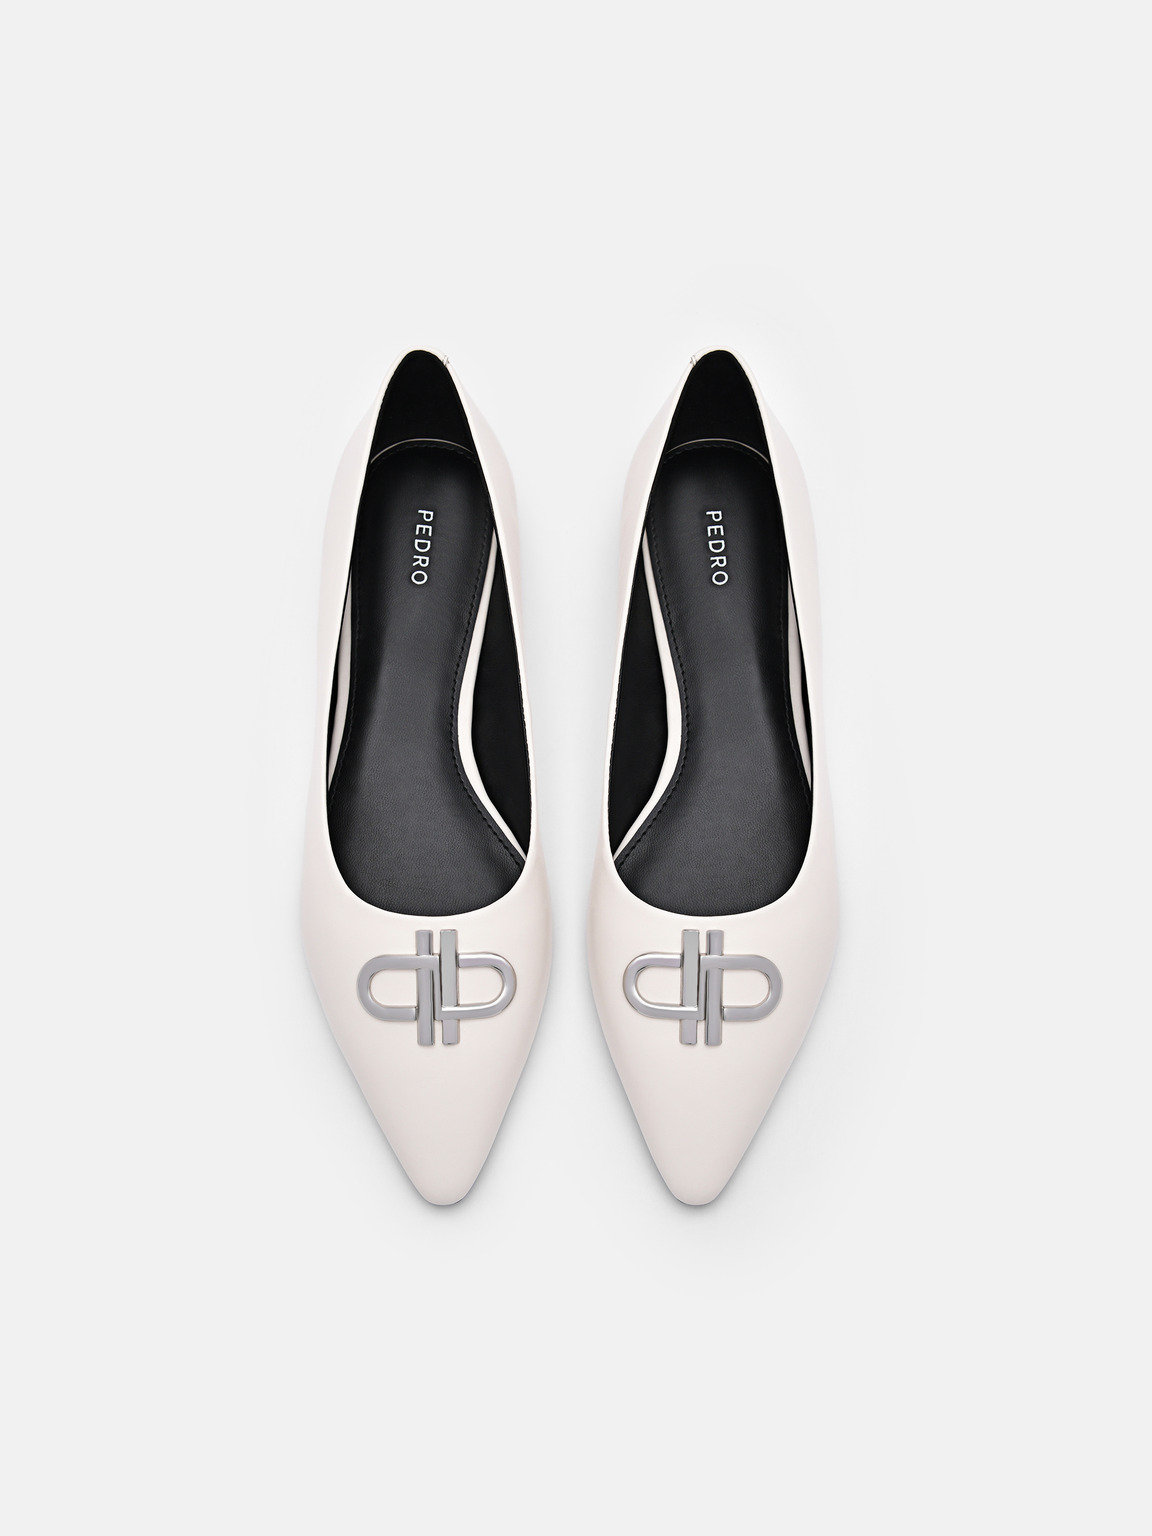 PEDRO標誌皮革芭蕾平底鞋, 粉笔白